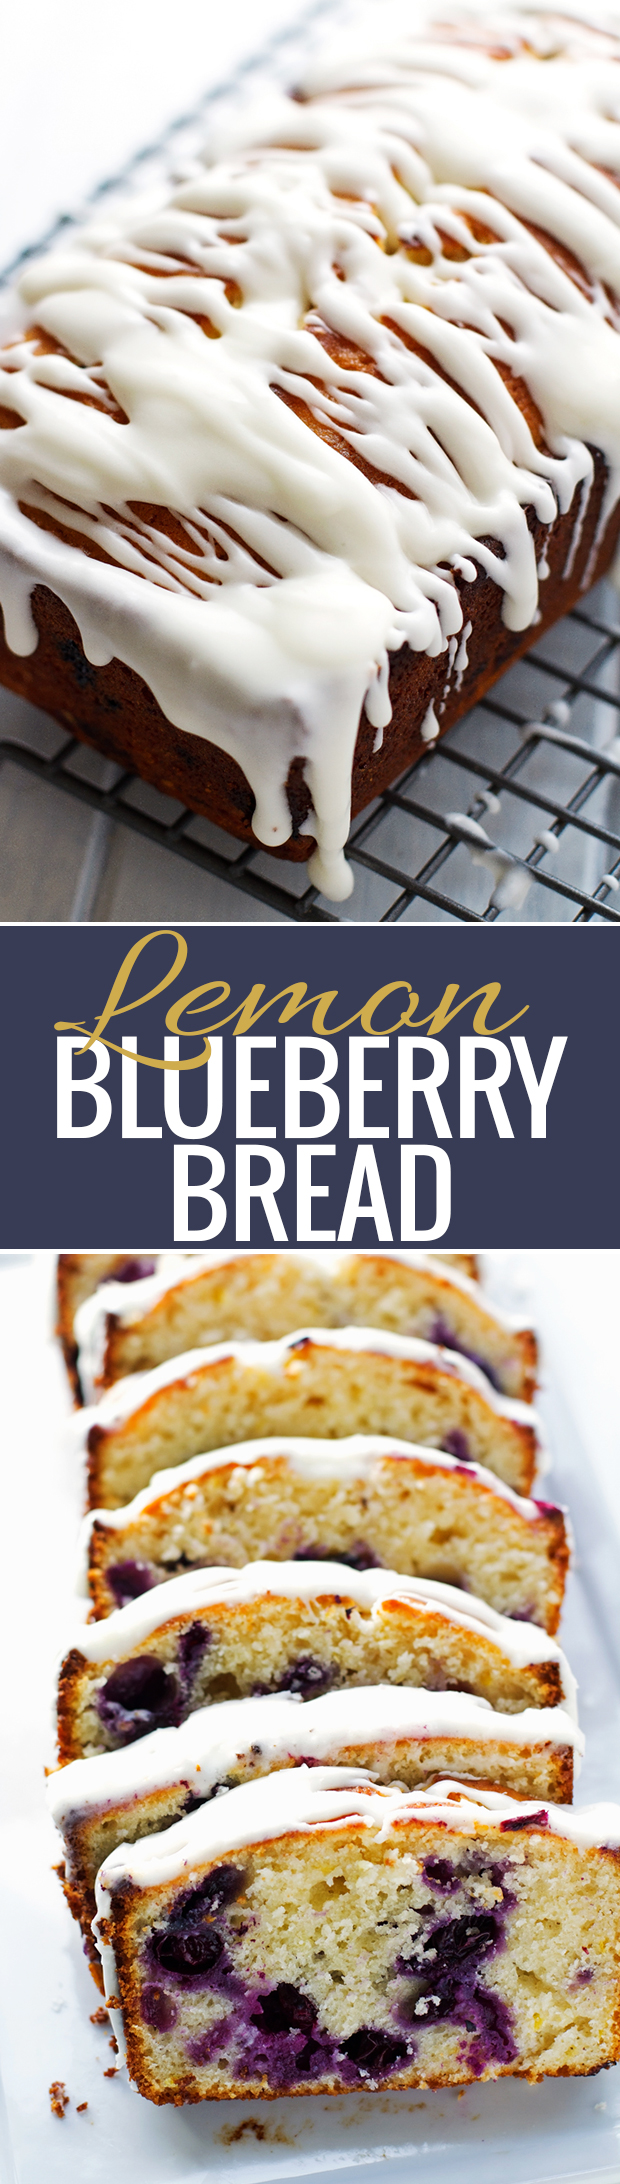 Lemon Blueberry Bread - A moist lemon poundcake studded with fresh juicy and plump blueberries! #blueberrybread #blueberrycake #poundcake #lemoncake #lemonblueberrycake | Littlespicejar.com